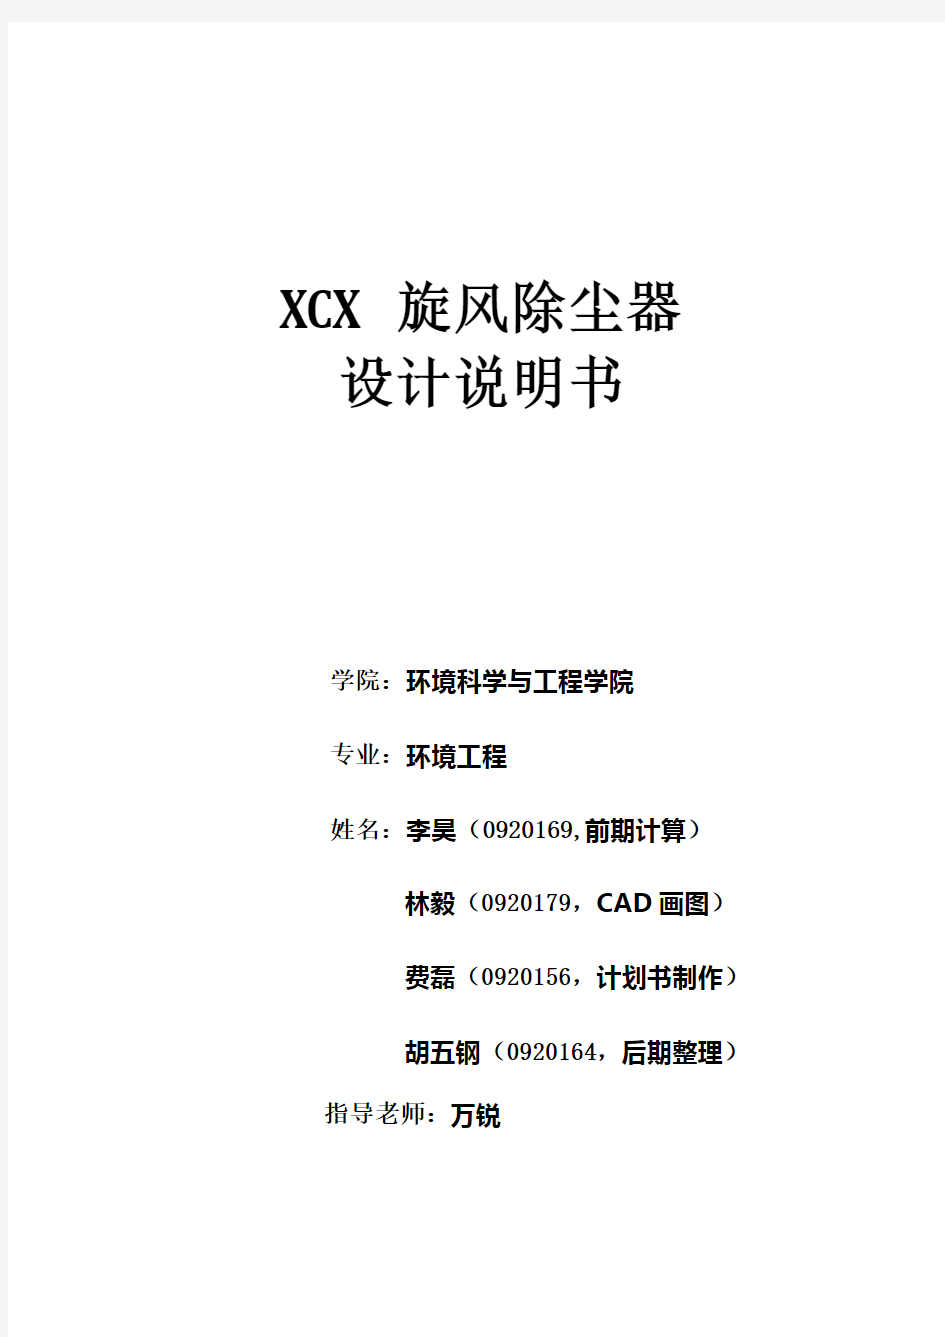 xcx旋风除尘器设计说明书(李昊林毅费磊胡五钢)